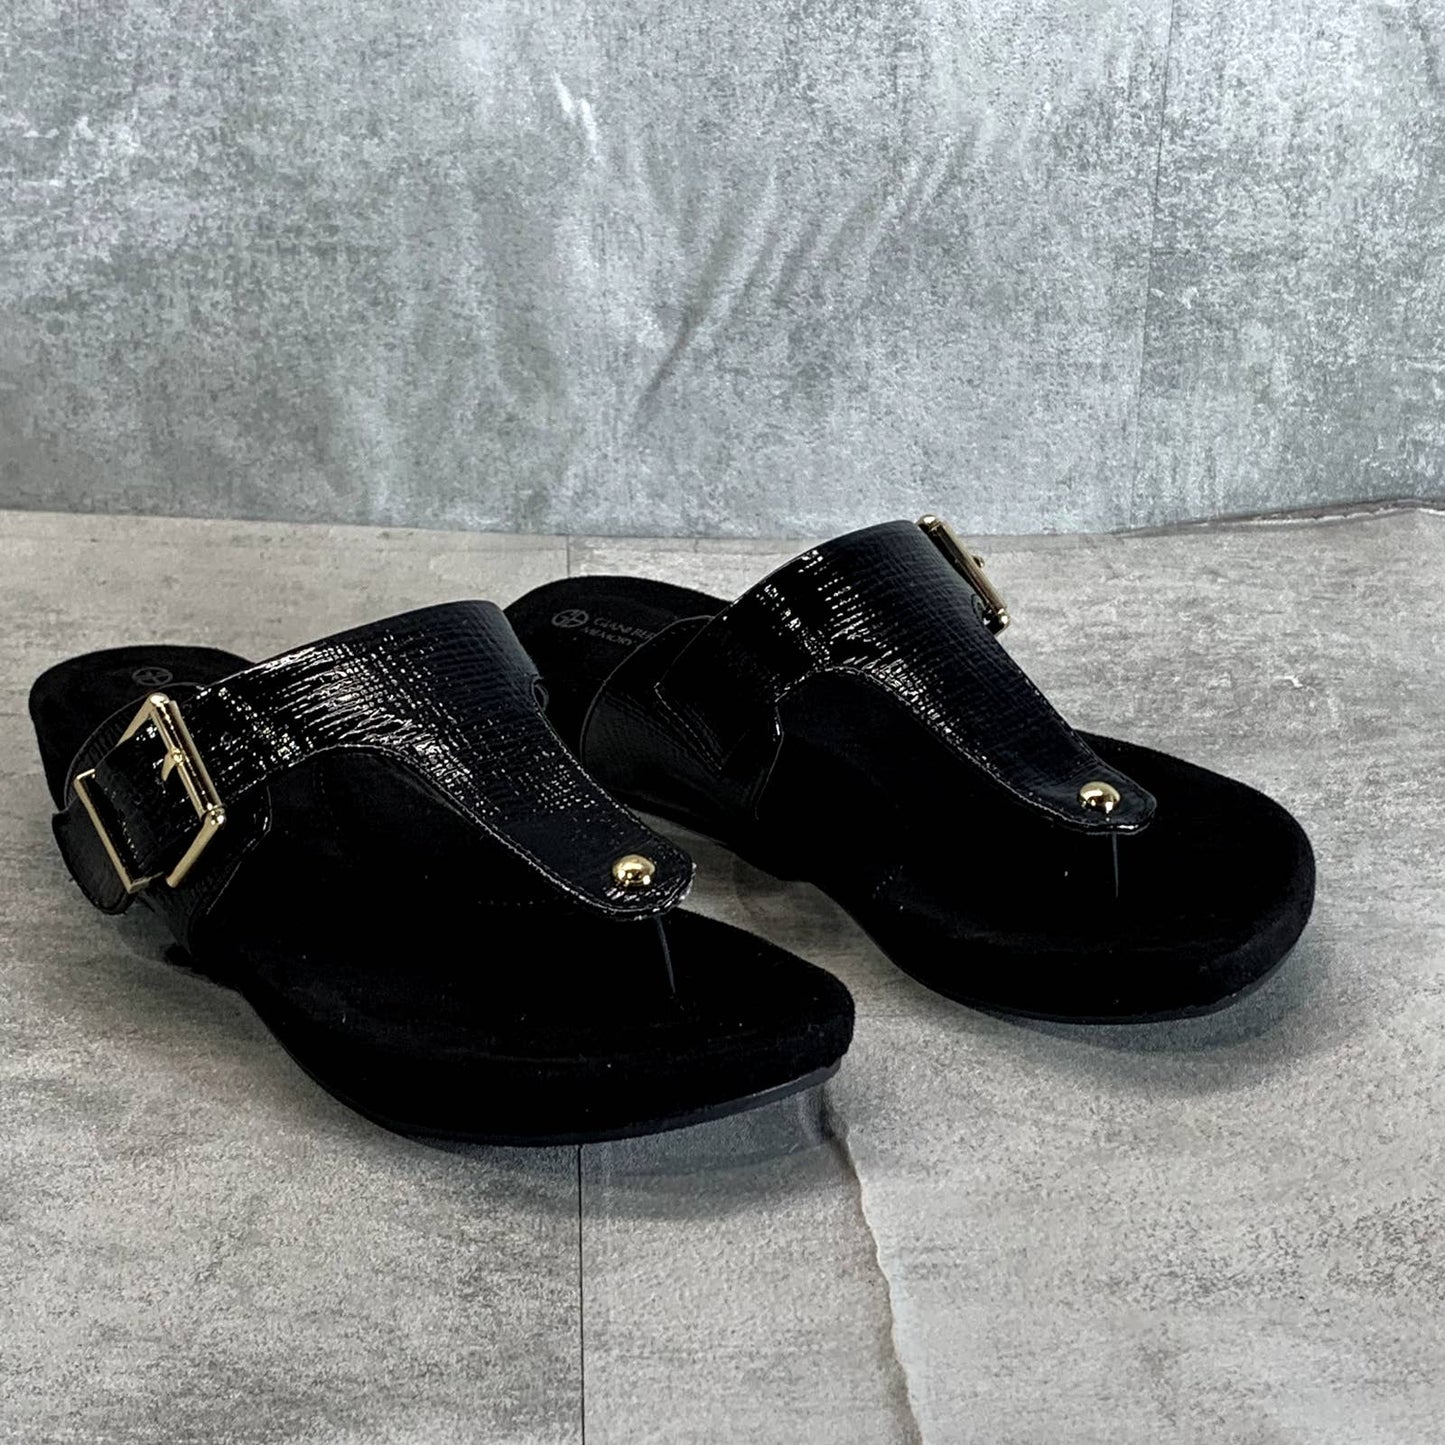 GIANI BERNINI Women's Black Rivver Memory-Foam Wedge Thong Sandals SZ 6